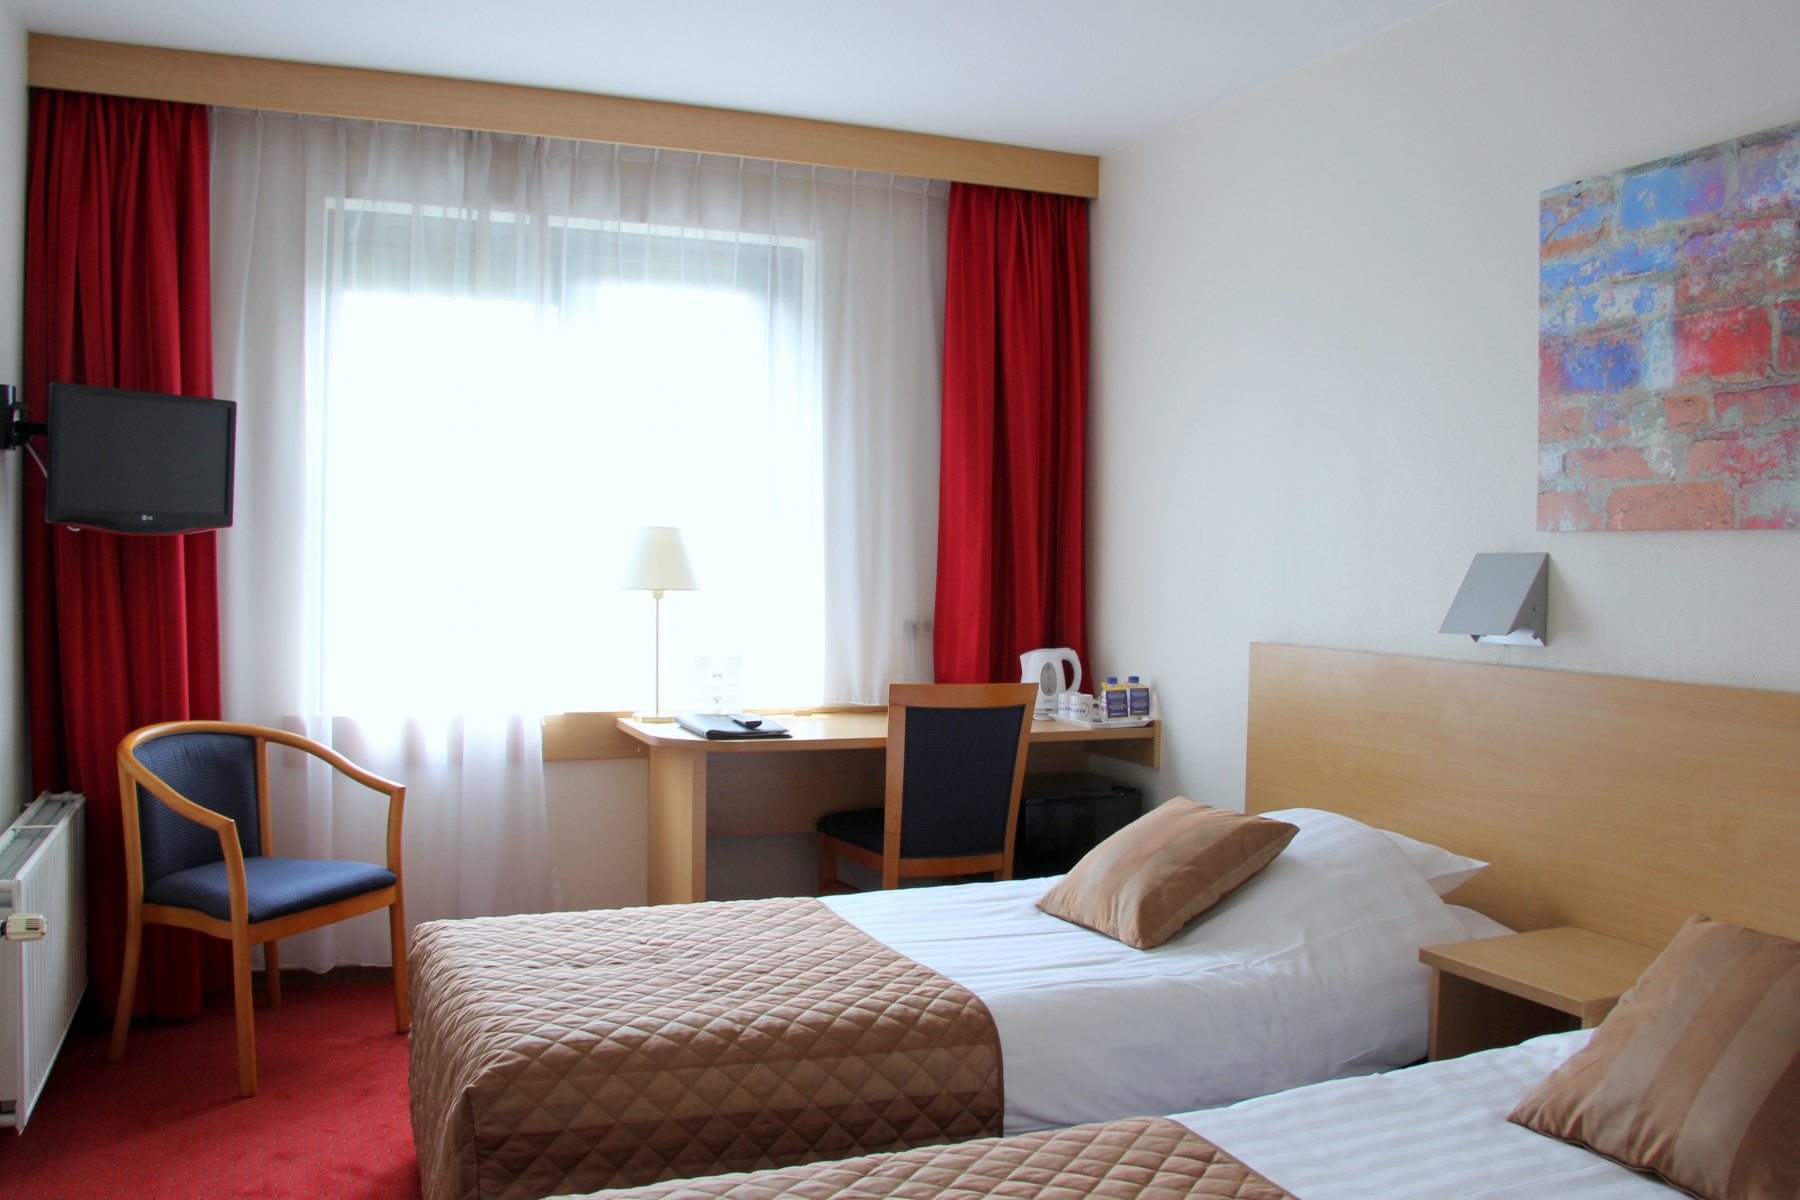 Bastion Hotel Düsseldorf Neuss <br/>59.00 ew <br/> <a href='http://vakantieoplossing.nl/outpage/?id=7d83c1dfc8b147e238c5adcb9d33b9cd' target='_blank'>View Details</a>